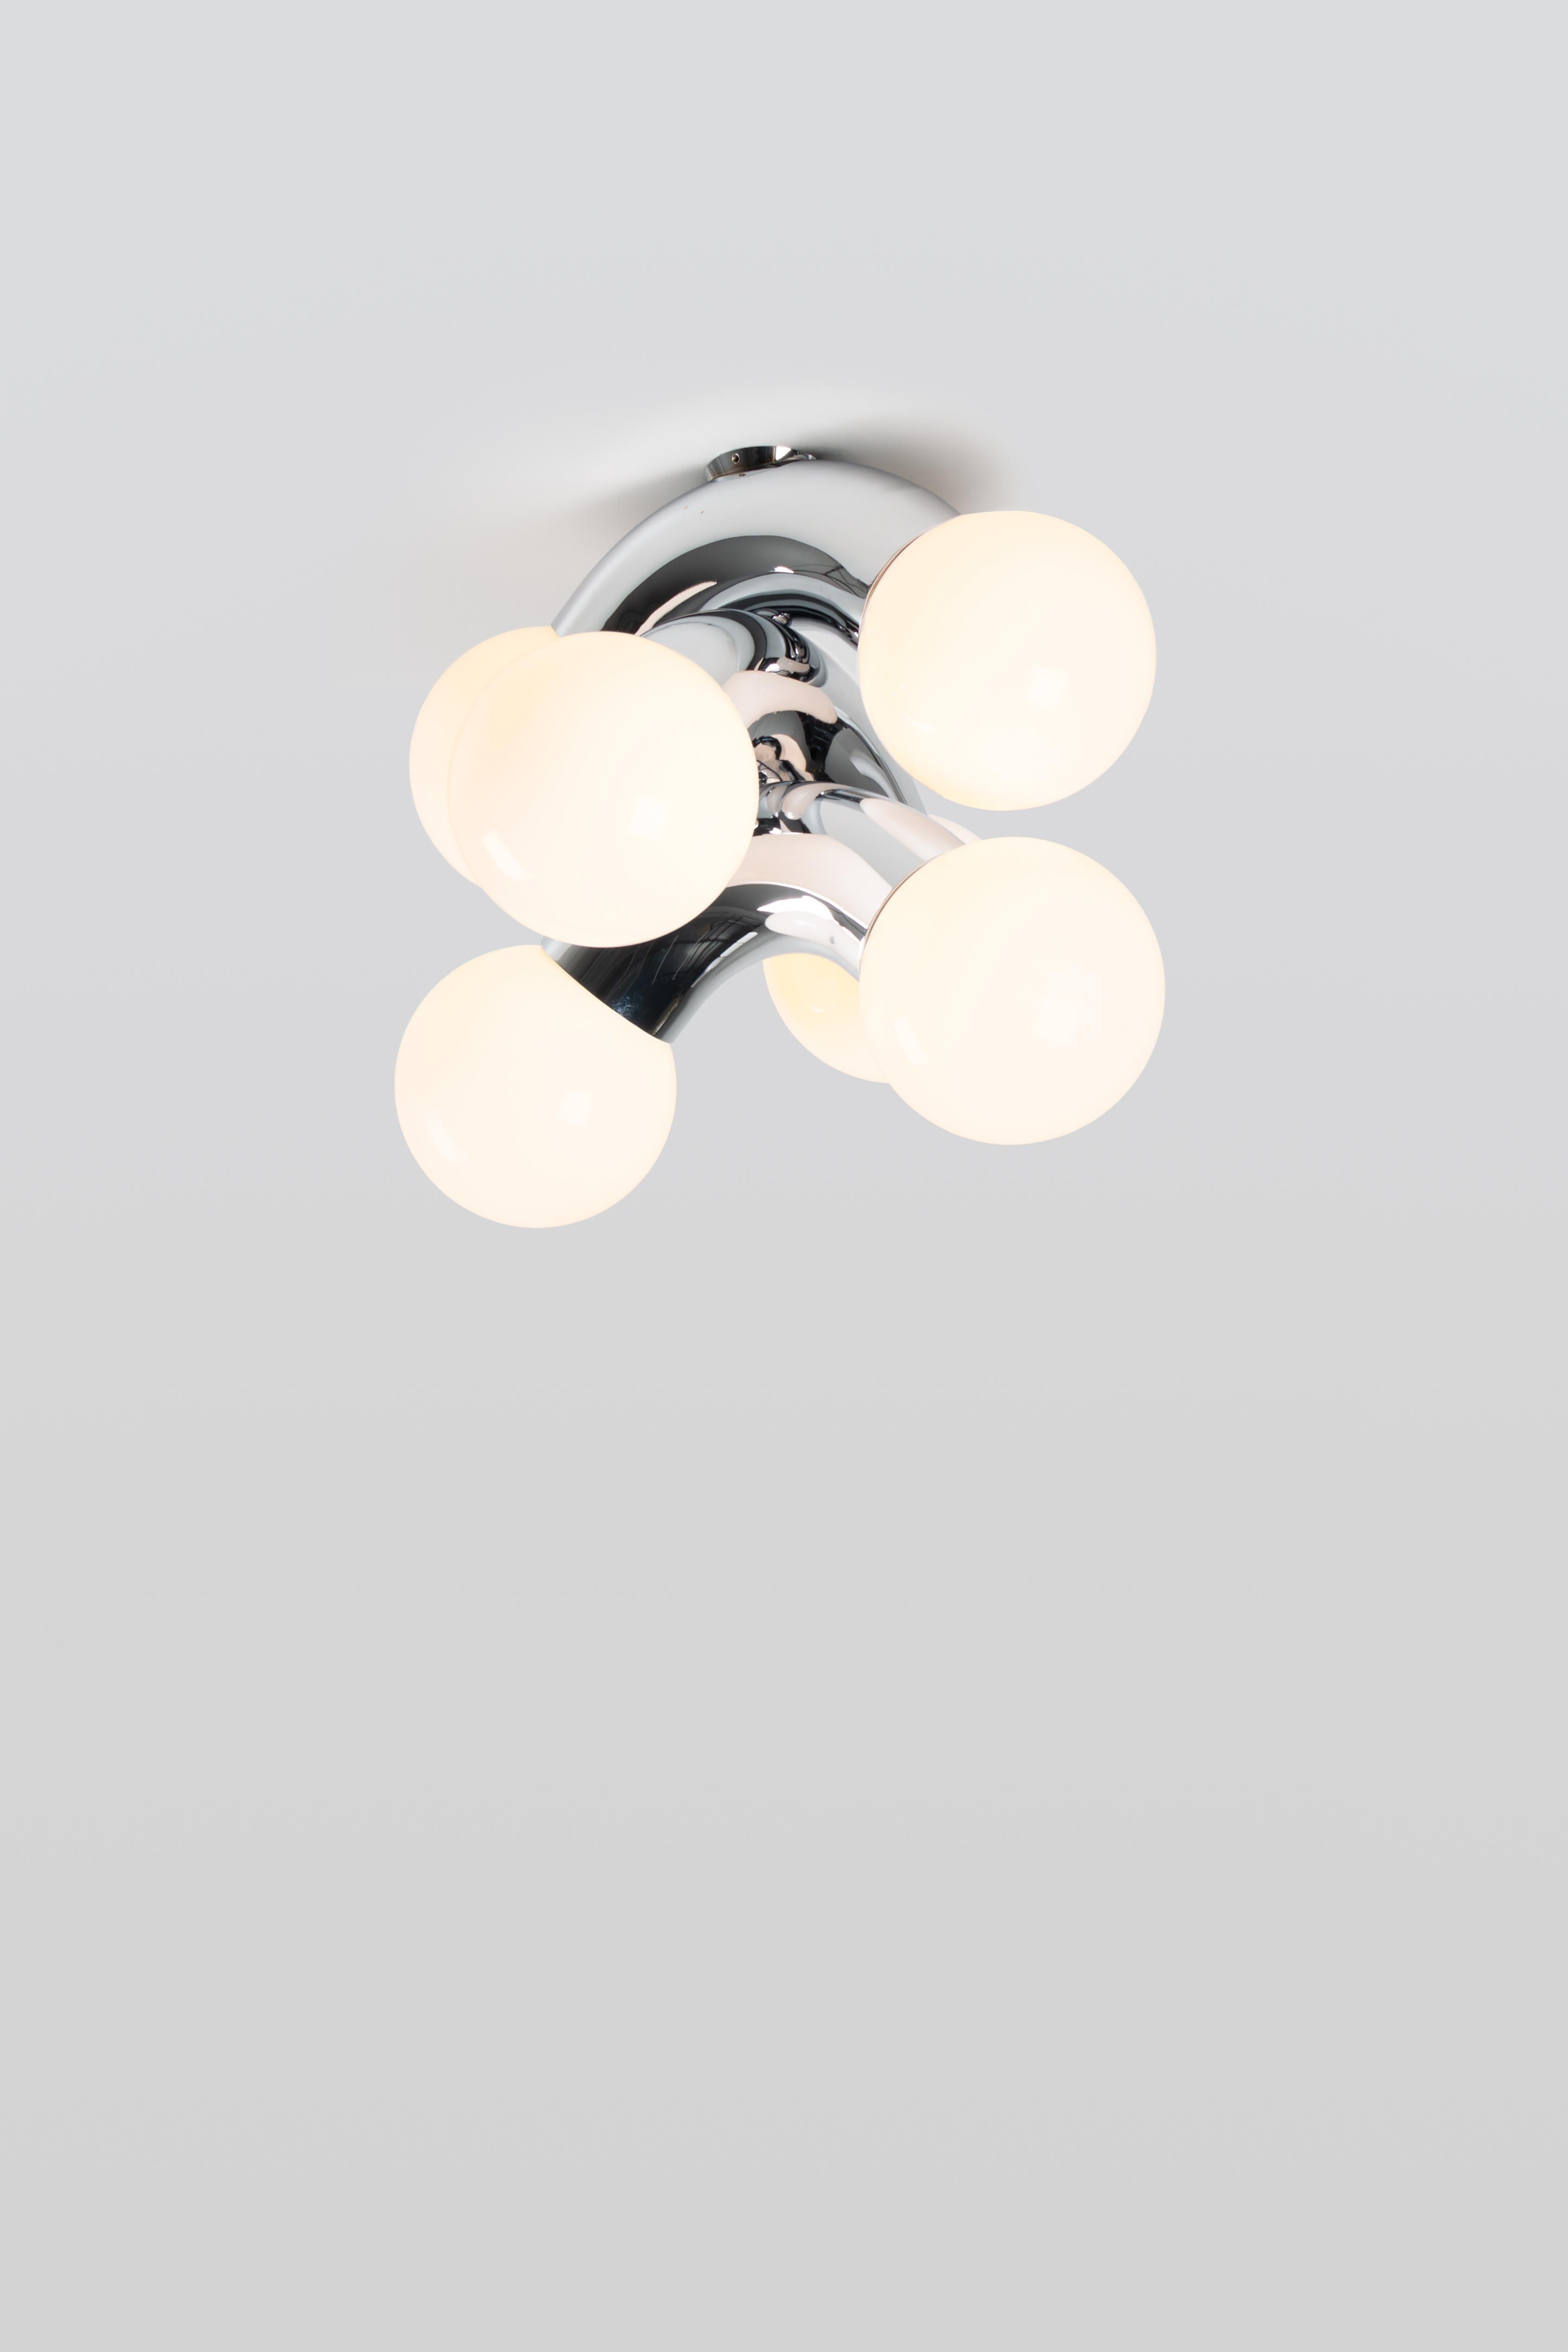 contemporary ceiling lights